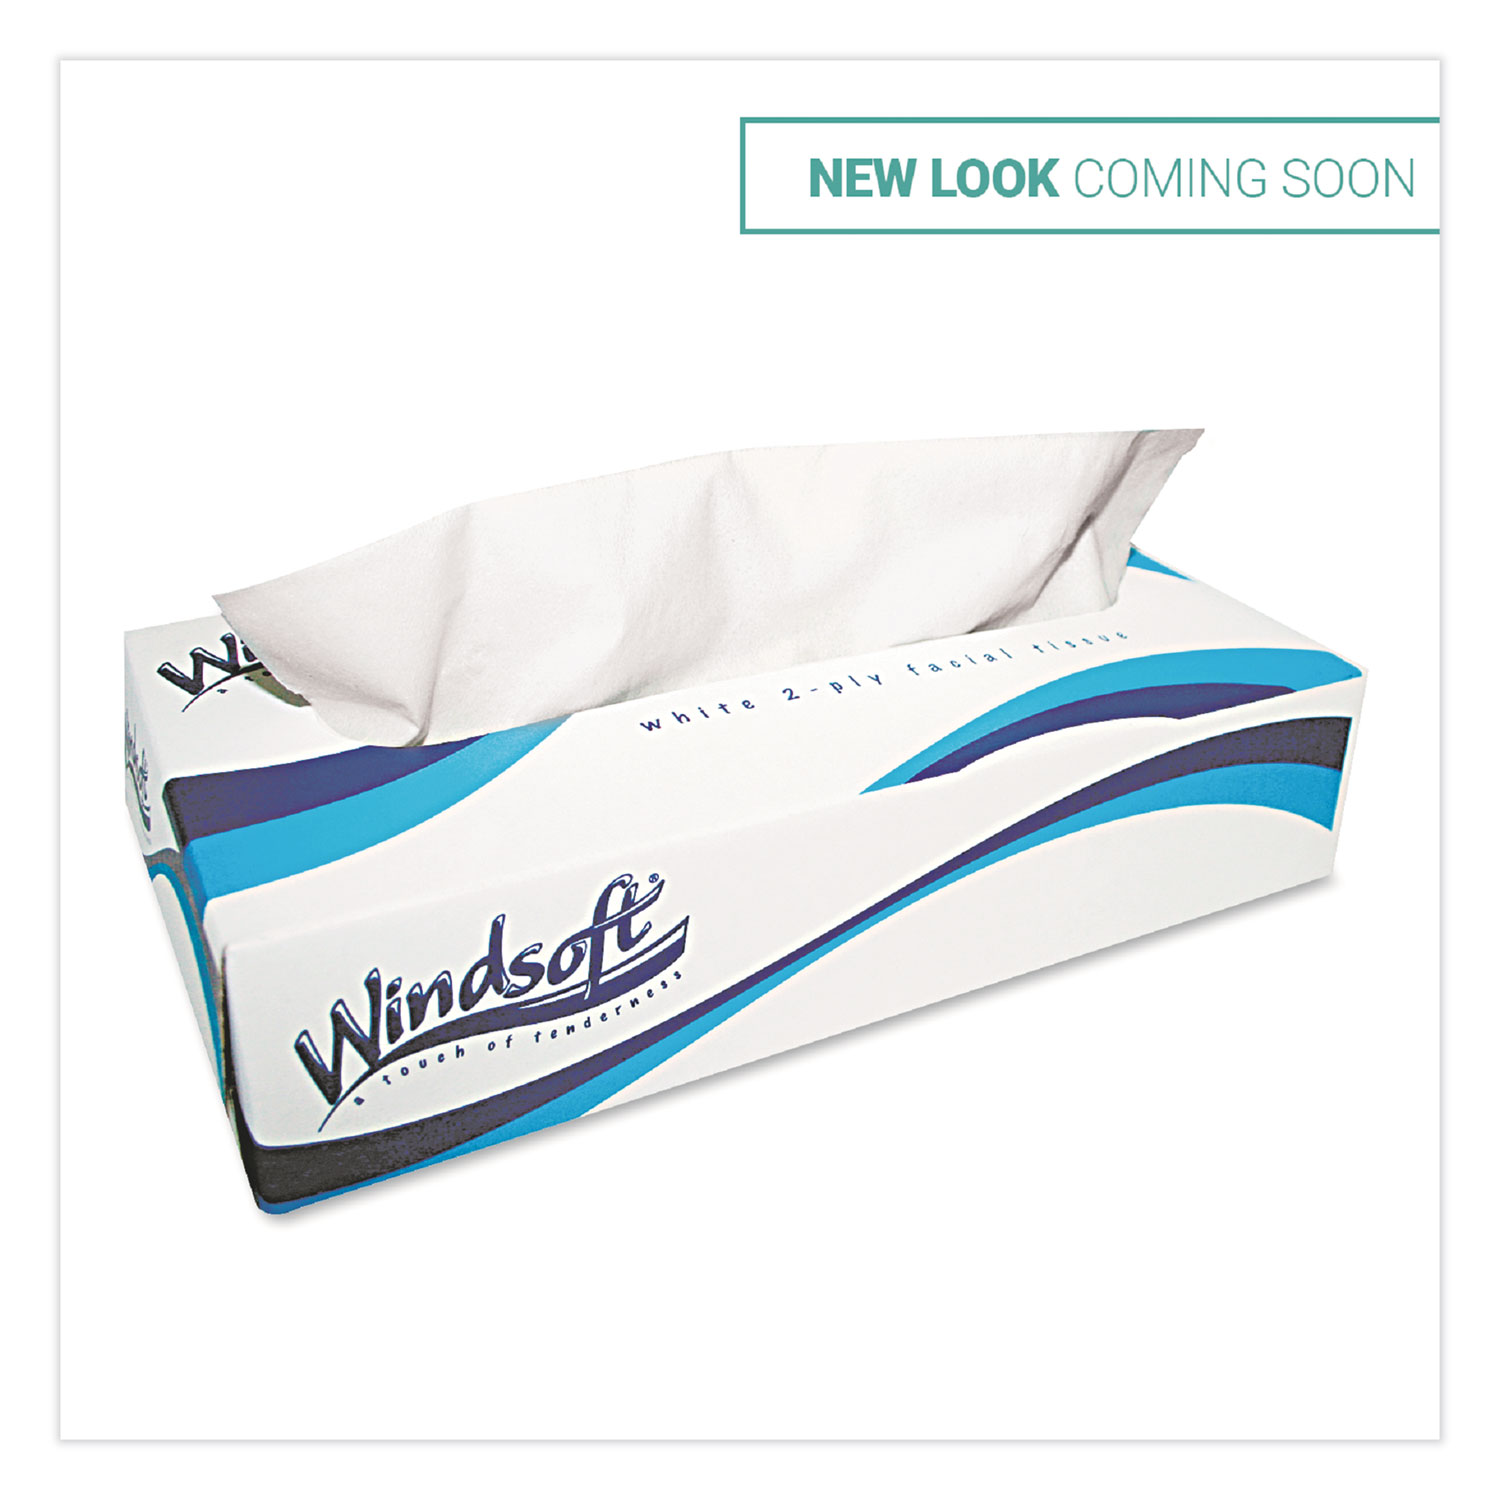  Windsoft WIN2360 Facial Tissue, 2 Ply, White, Flat Pop-Up Box, 100 Sheets/Box, 30 Boxes/Carton (WIN2360) 